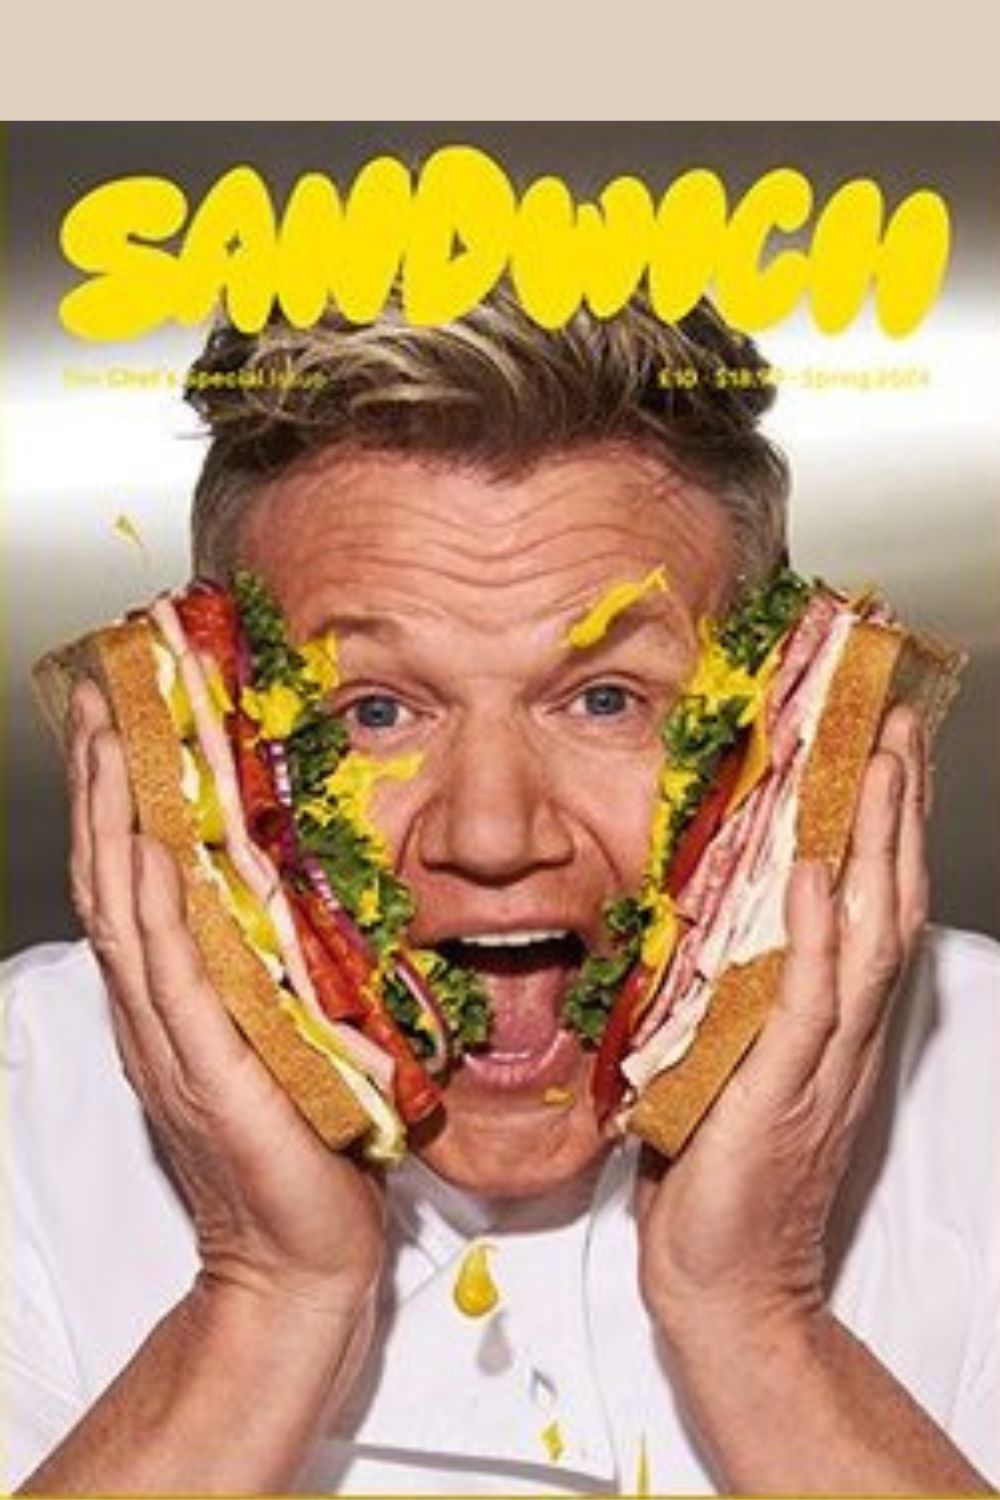 Sandwich magazine Issue 8 cover